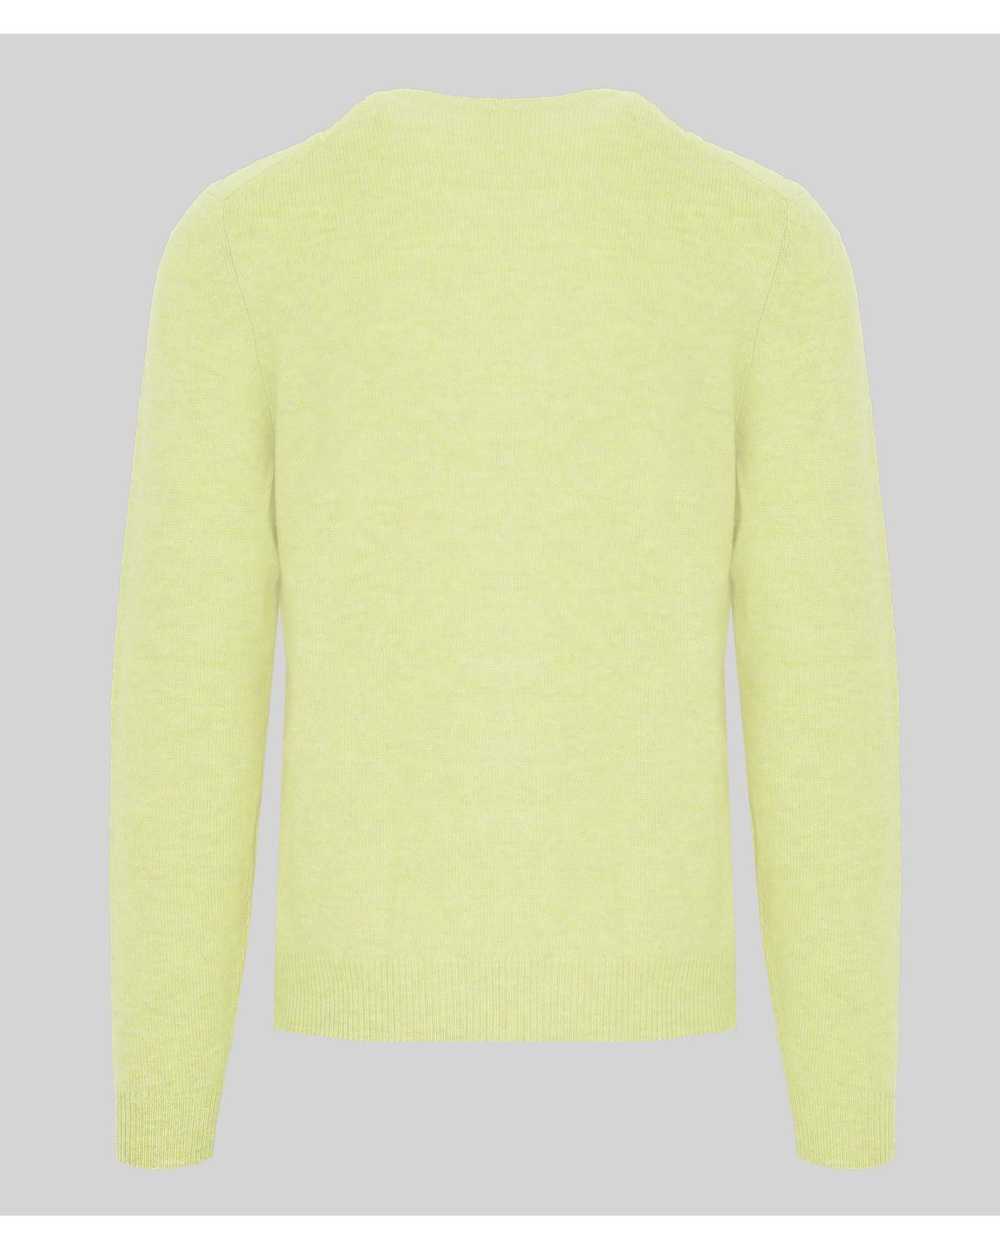 Malo Wool Cashmere Round Neck Sweater - image 2